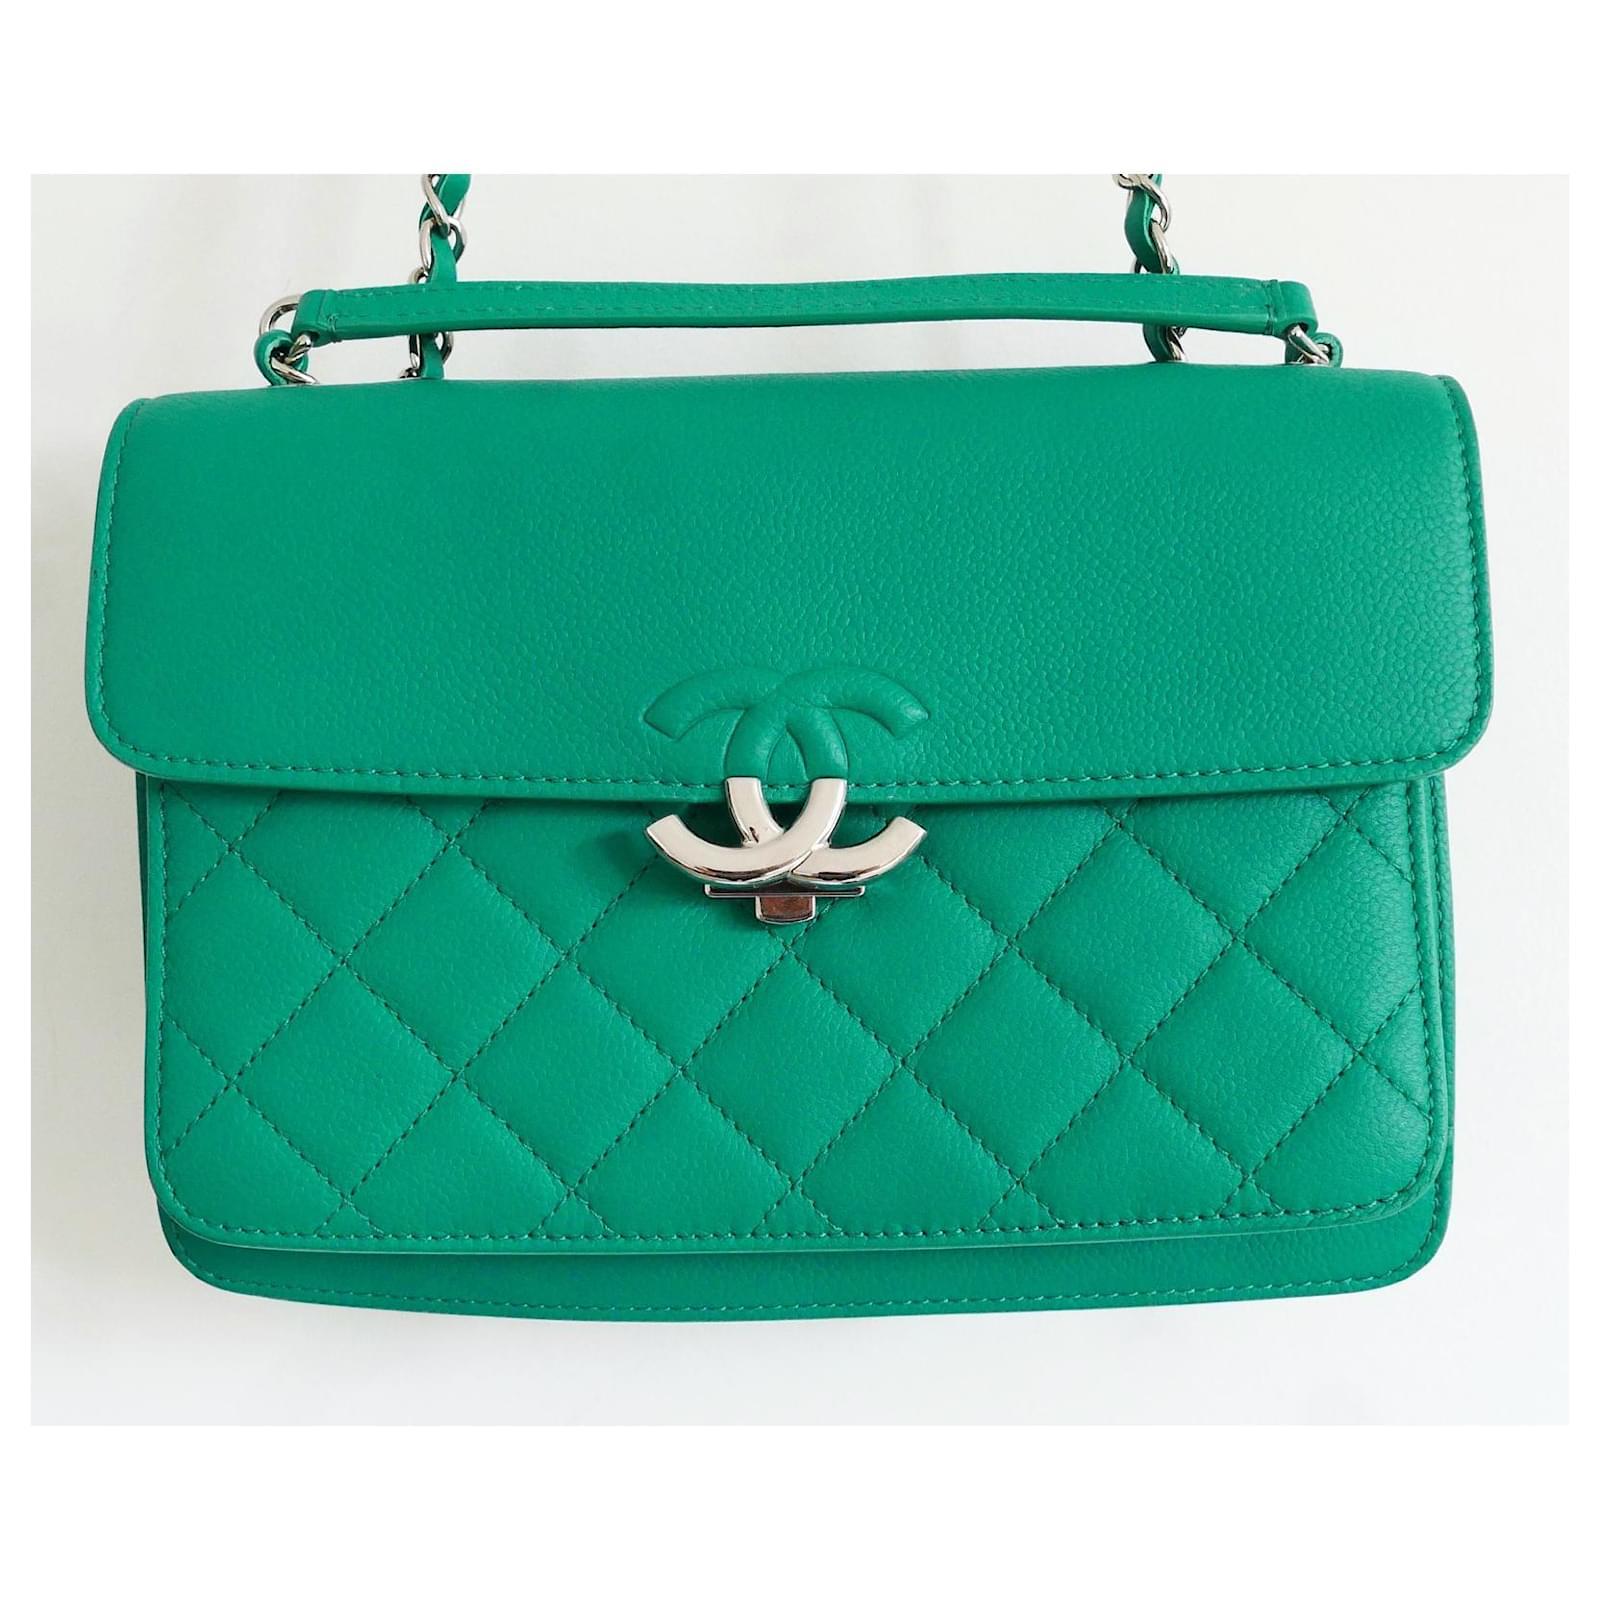 Chanel Mini Urban Companion Flap Bag Green In New Condition For Sale In London, GB